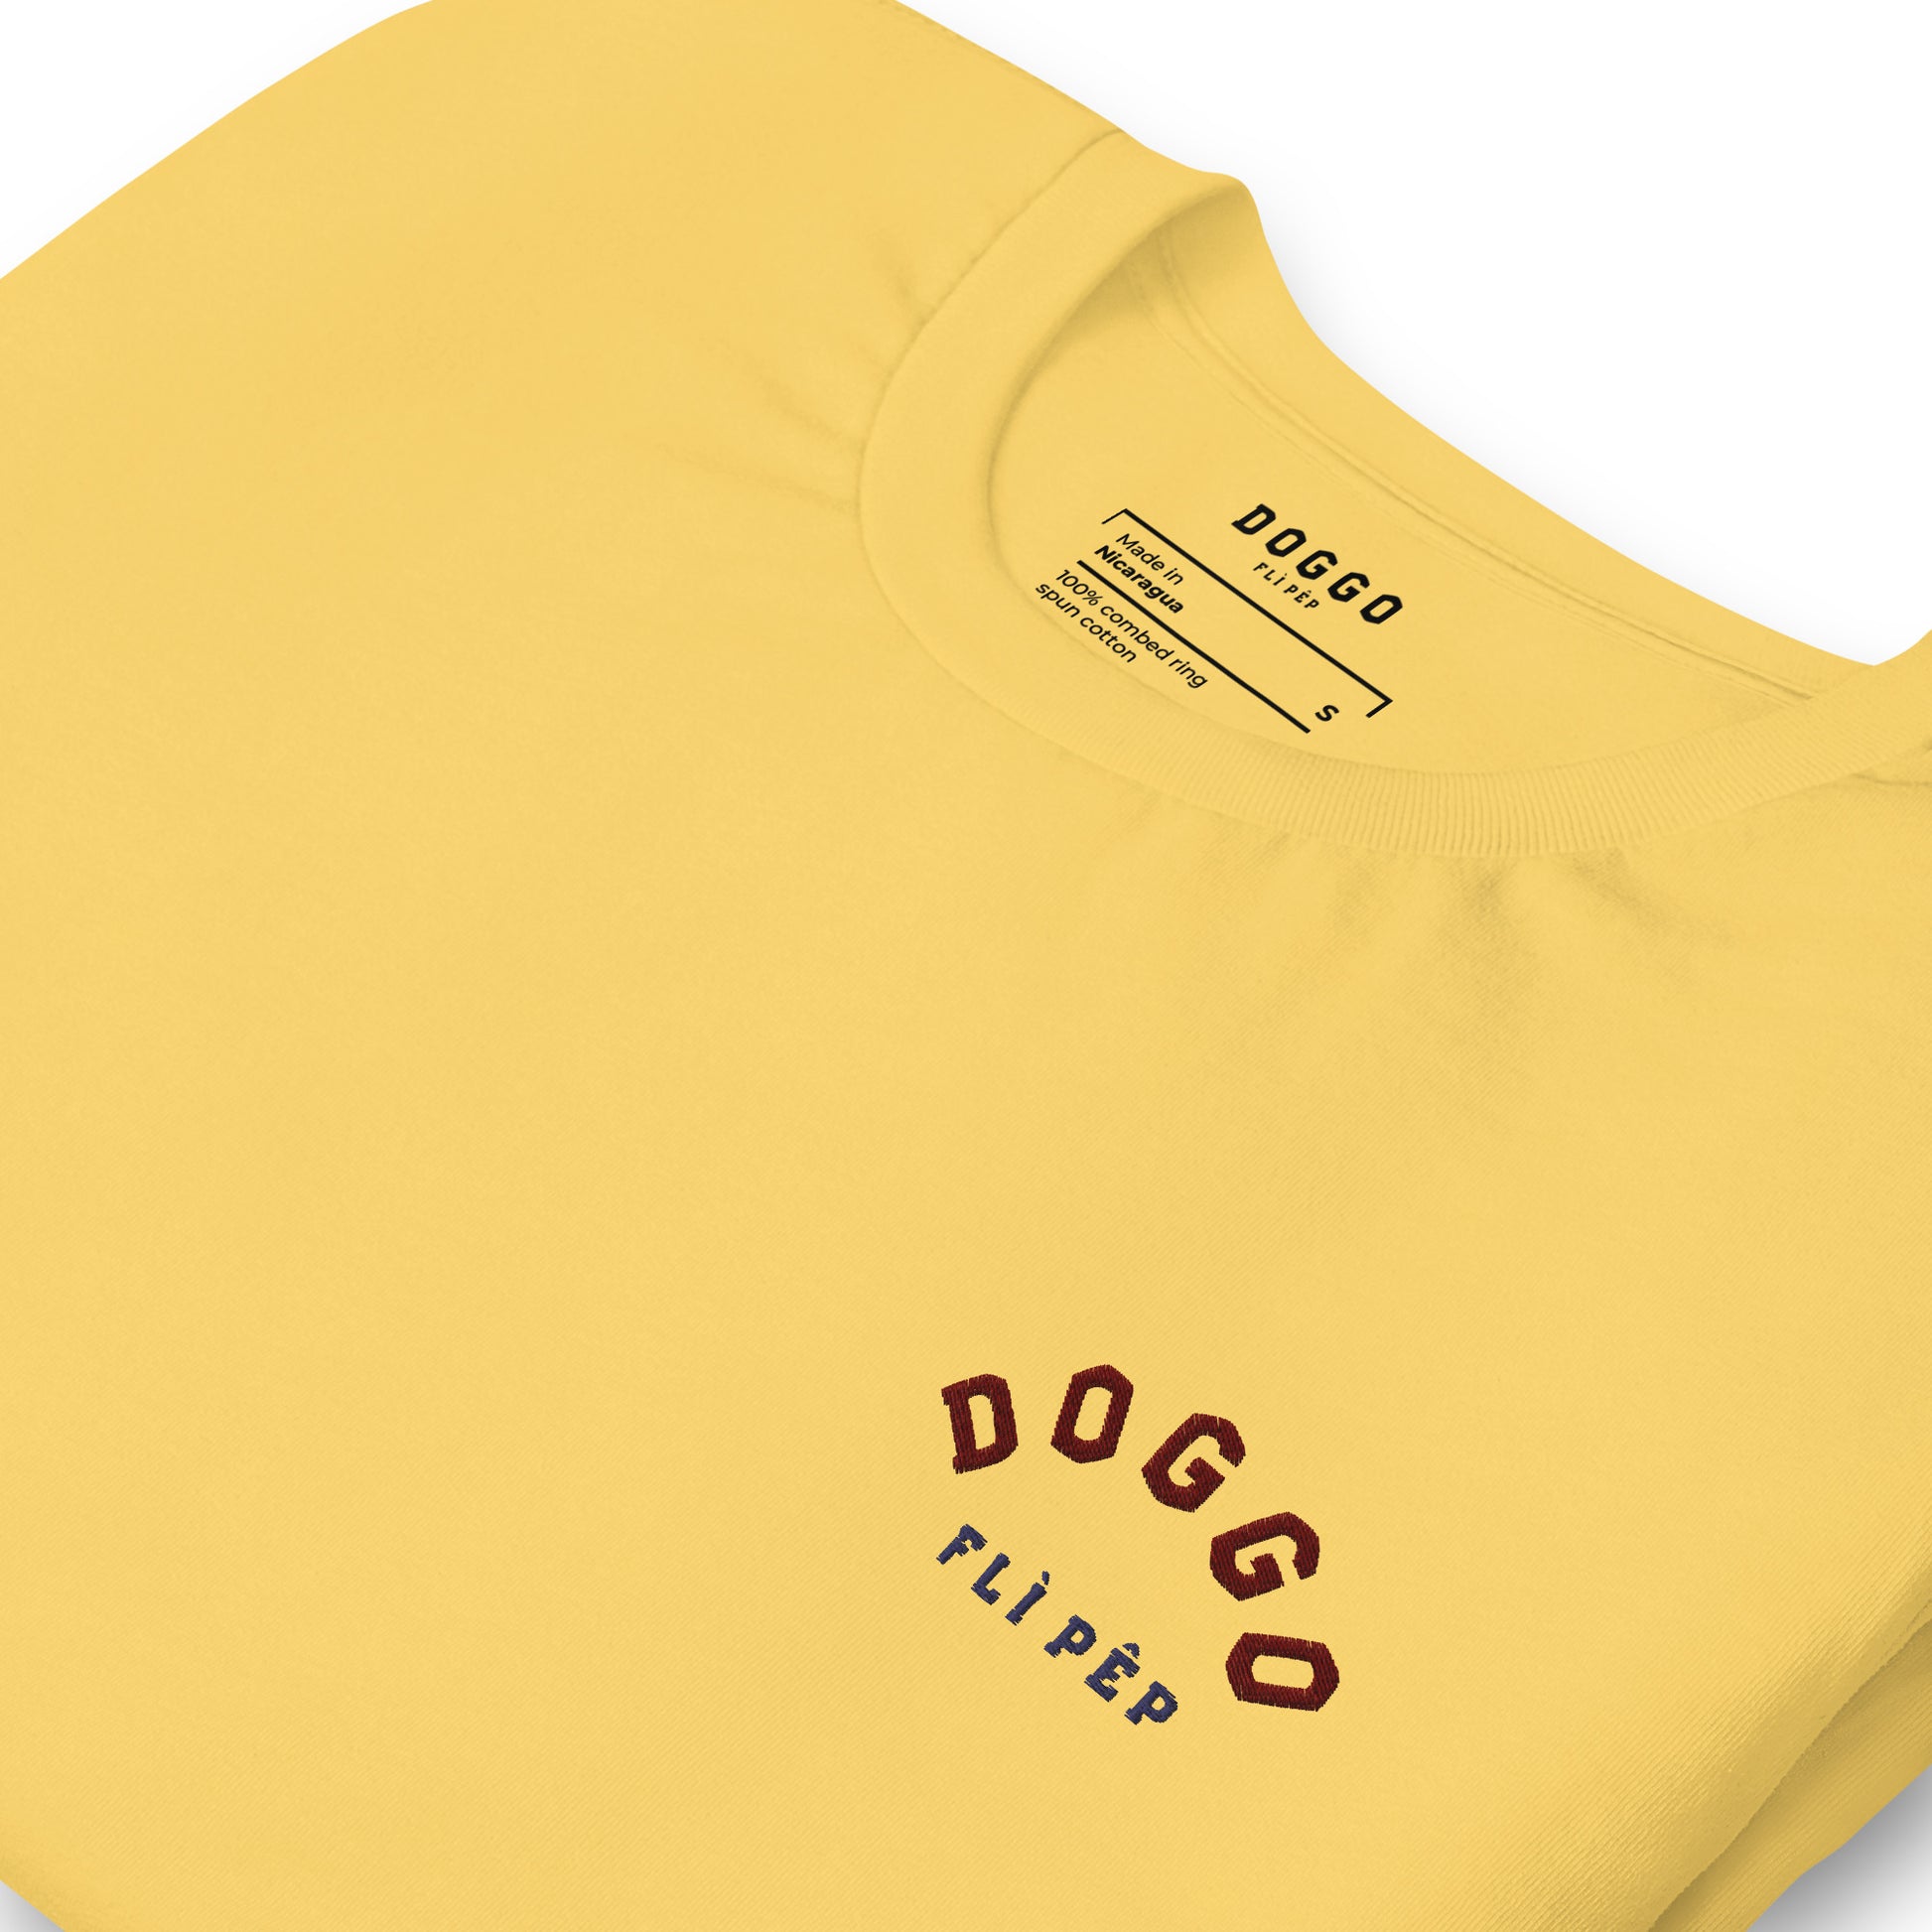 Curved Doggo Embroidered Cotton Tee - FLÌ PÊP™